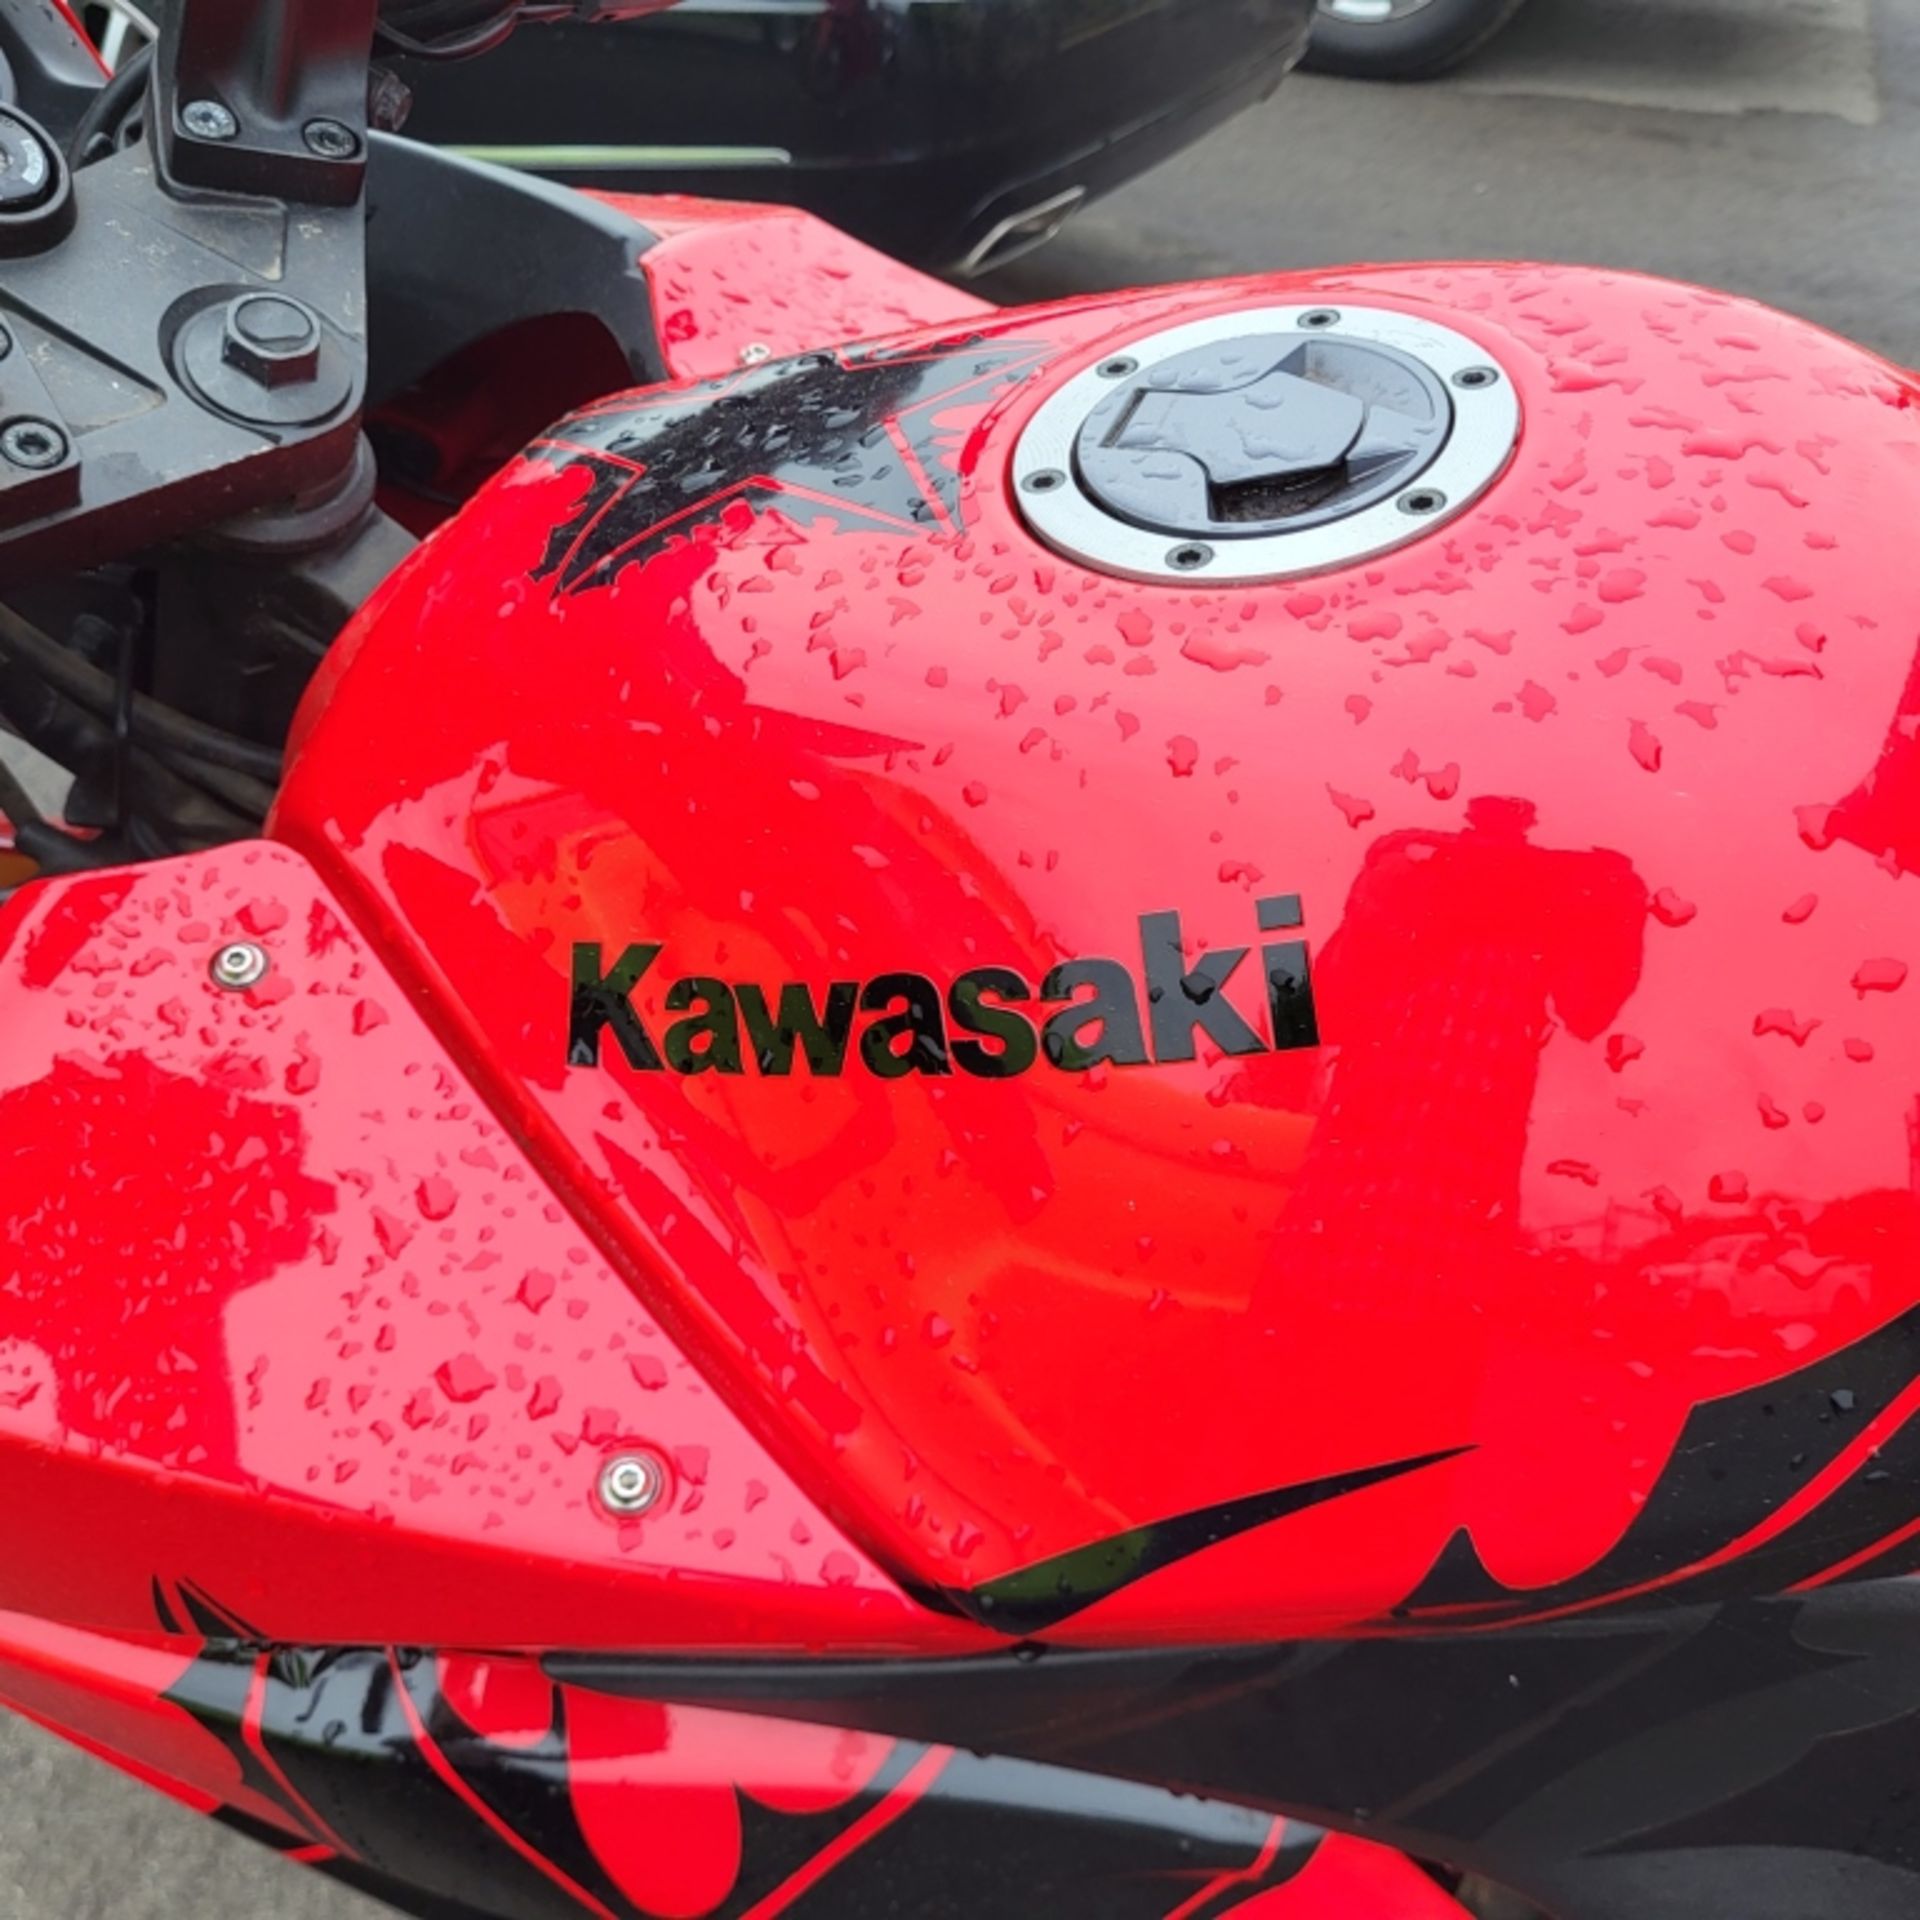 2010 Kawasaki Ninja 250r Motorcycle - Image 5 of 17